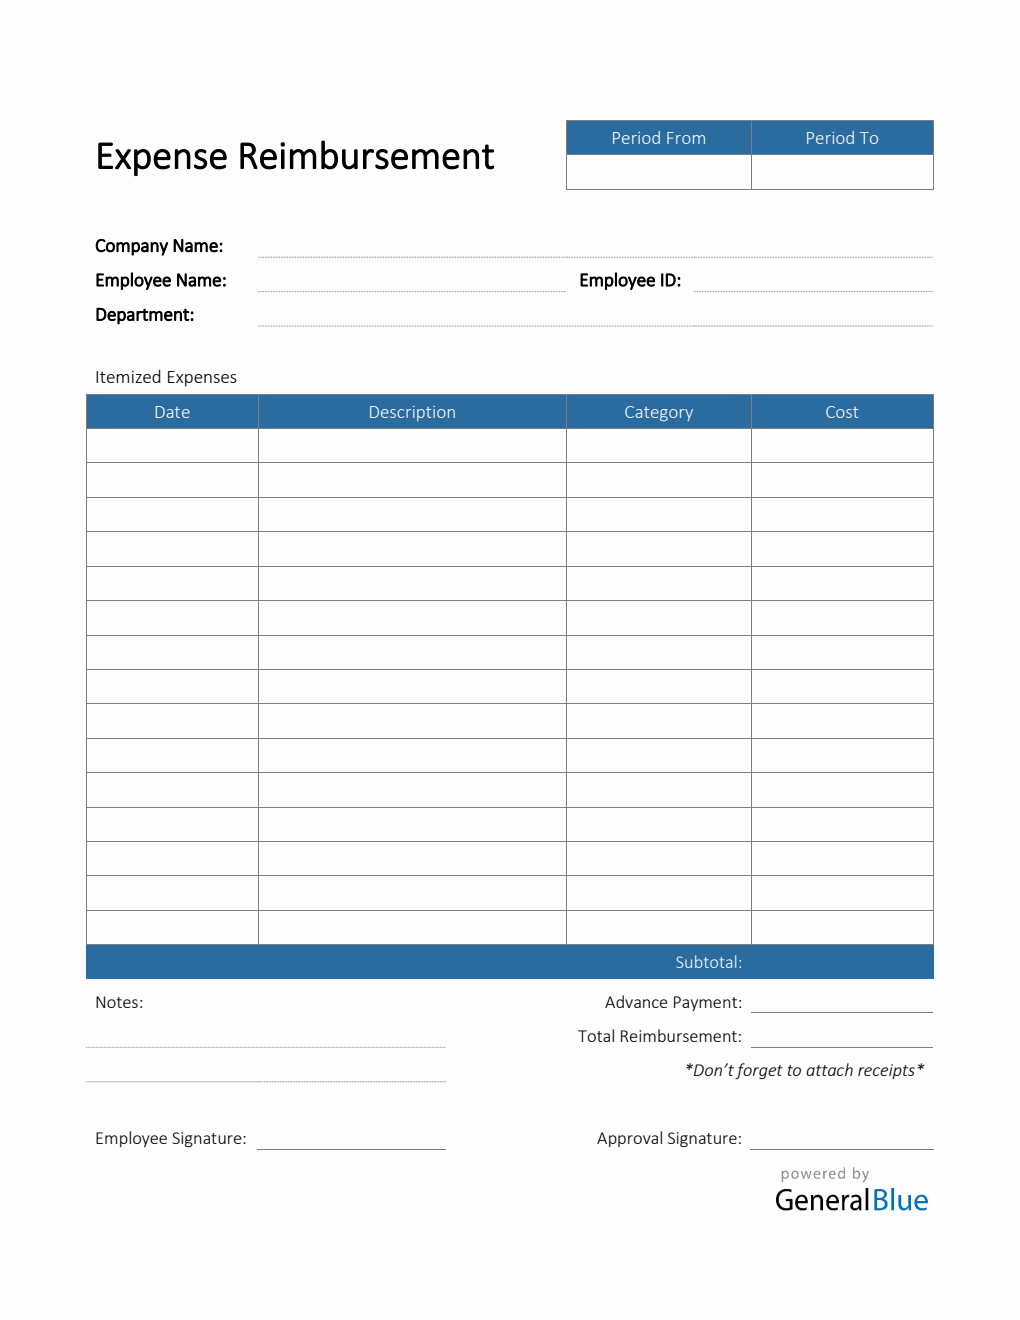 Expense Reimbursement Form in PDF (Blue)